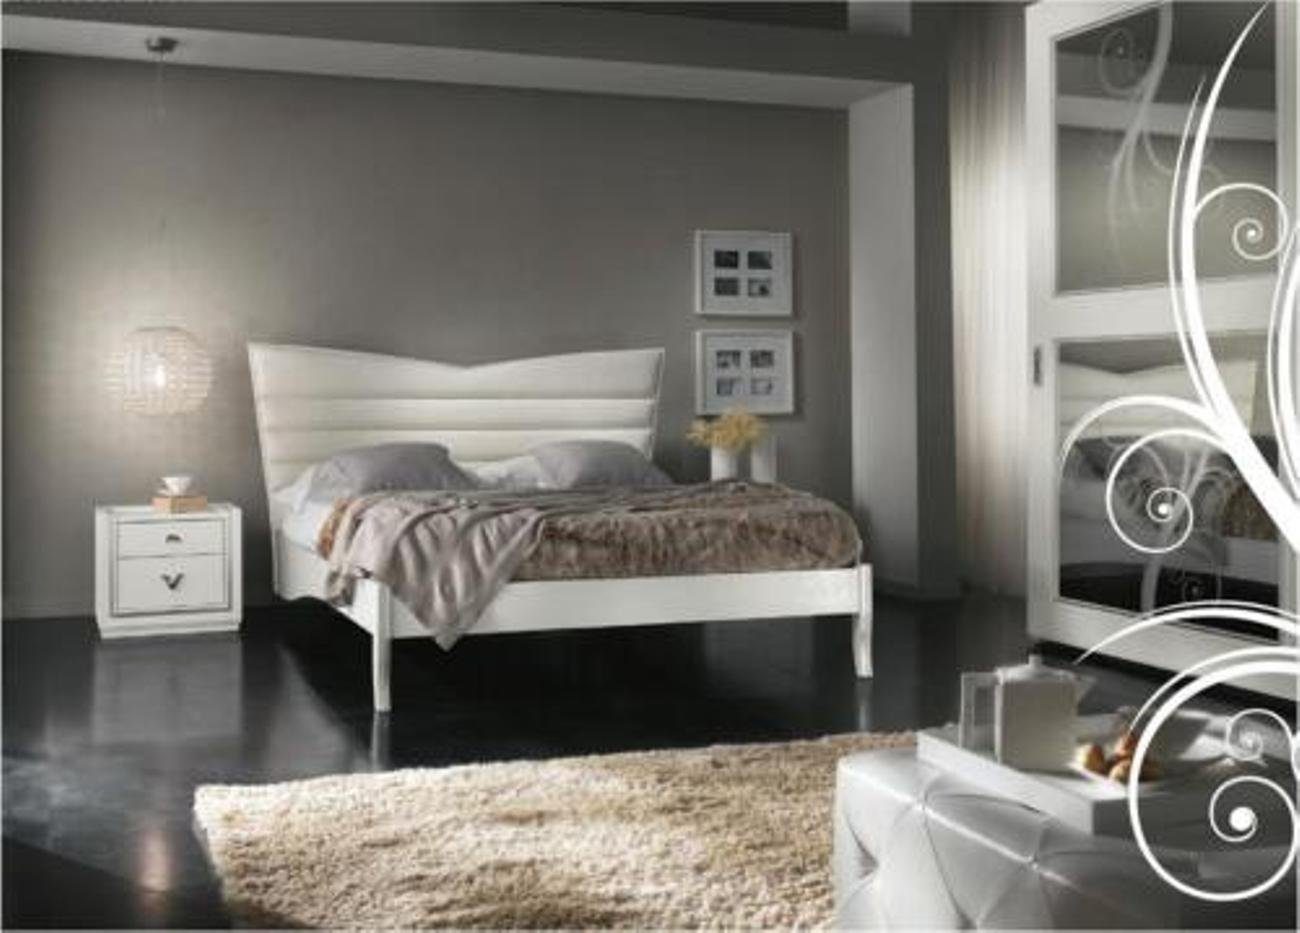 JVmoebel Bett, Luxus Bett Holz Betten Bettrahmen Weiß Doppel Bettgestell Betten